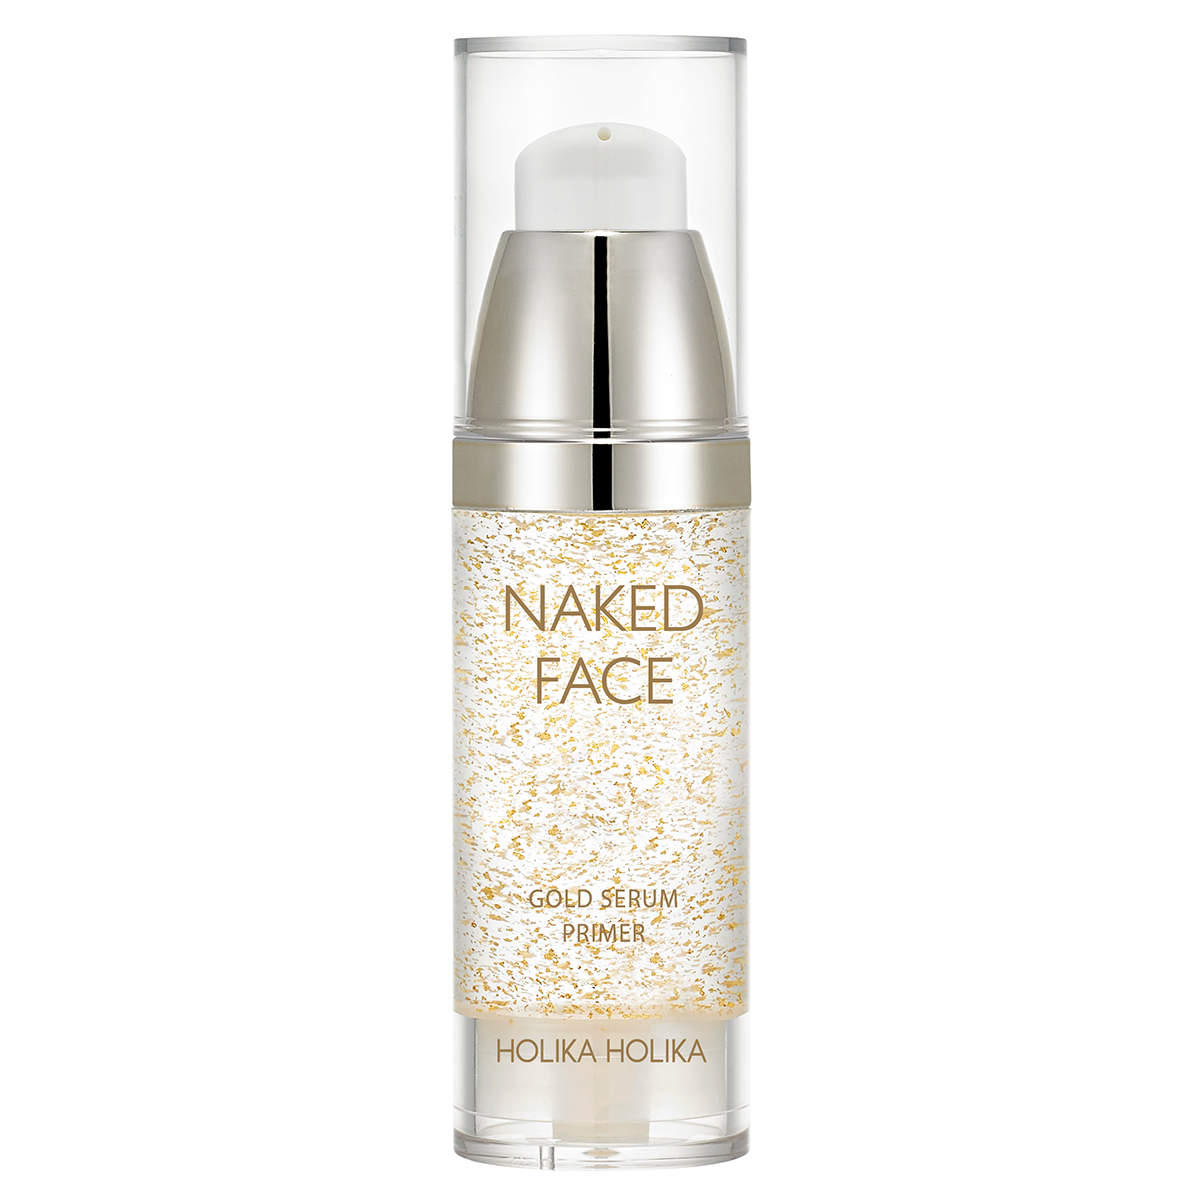 Naked Face Gold Serum Primer,  30 ml Holika Holika K-Beauty: Primer